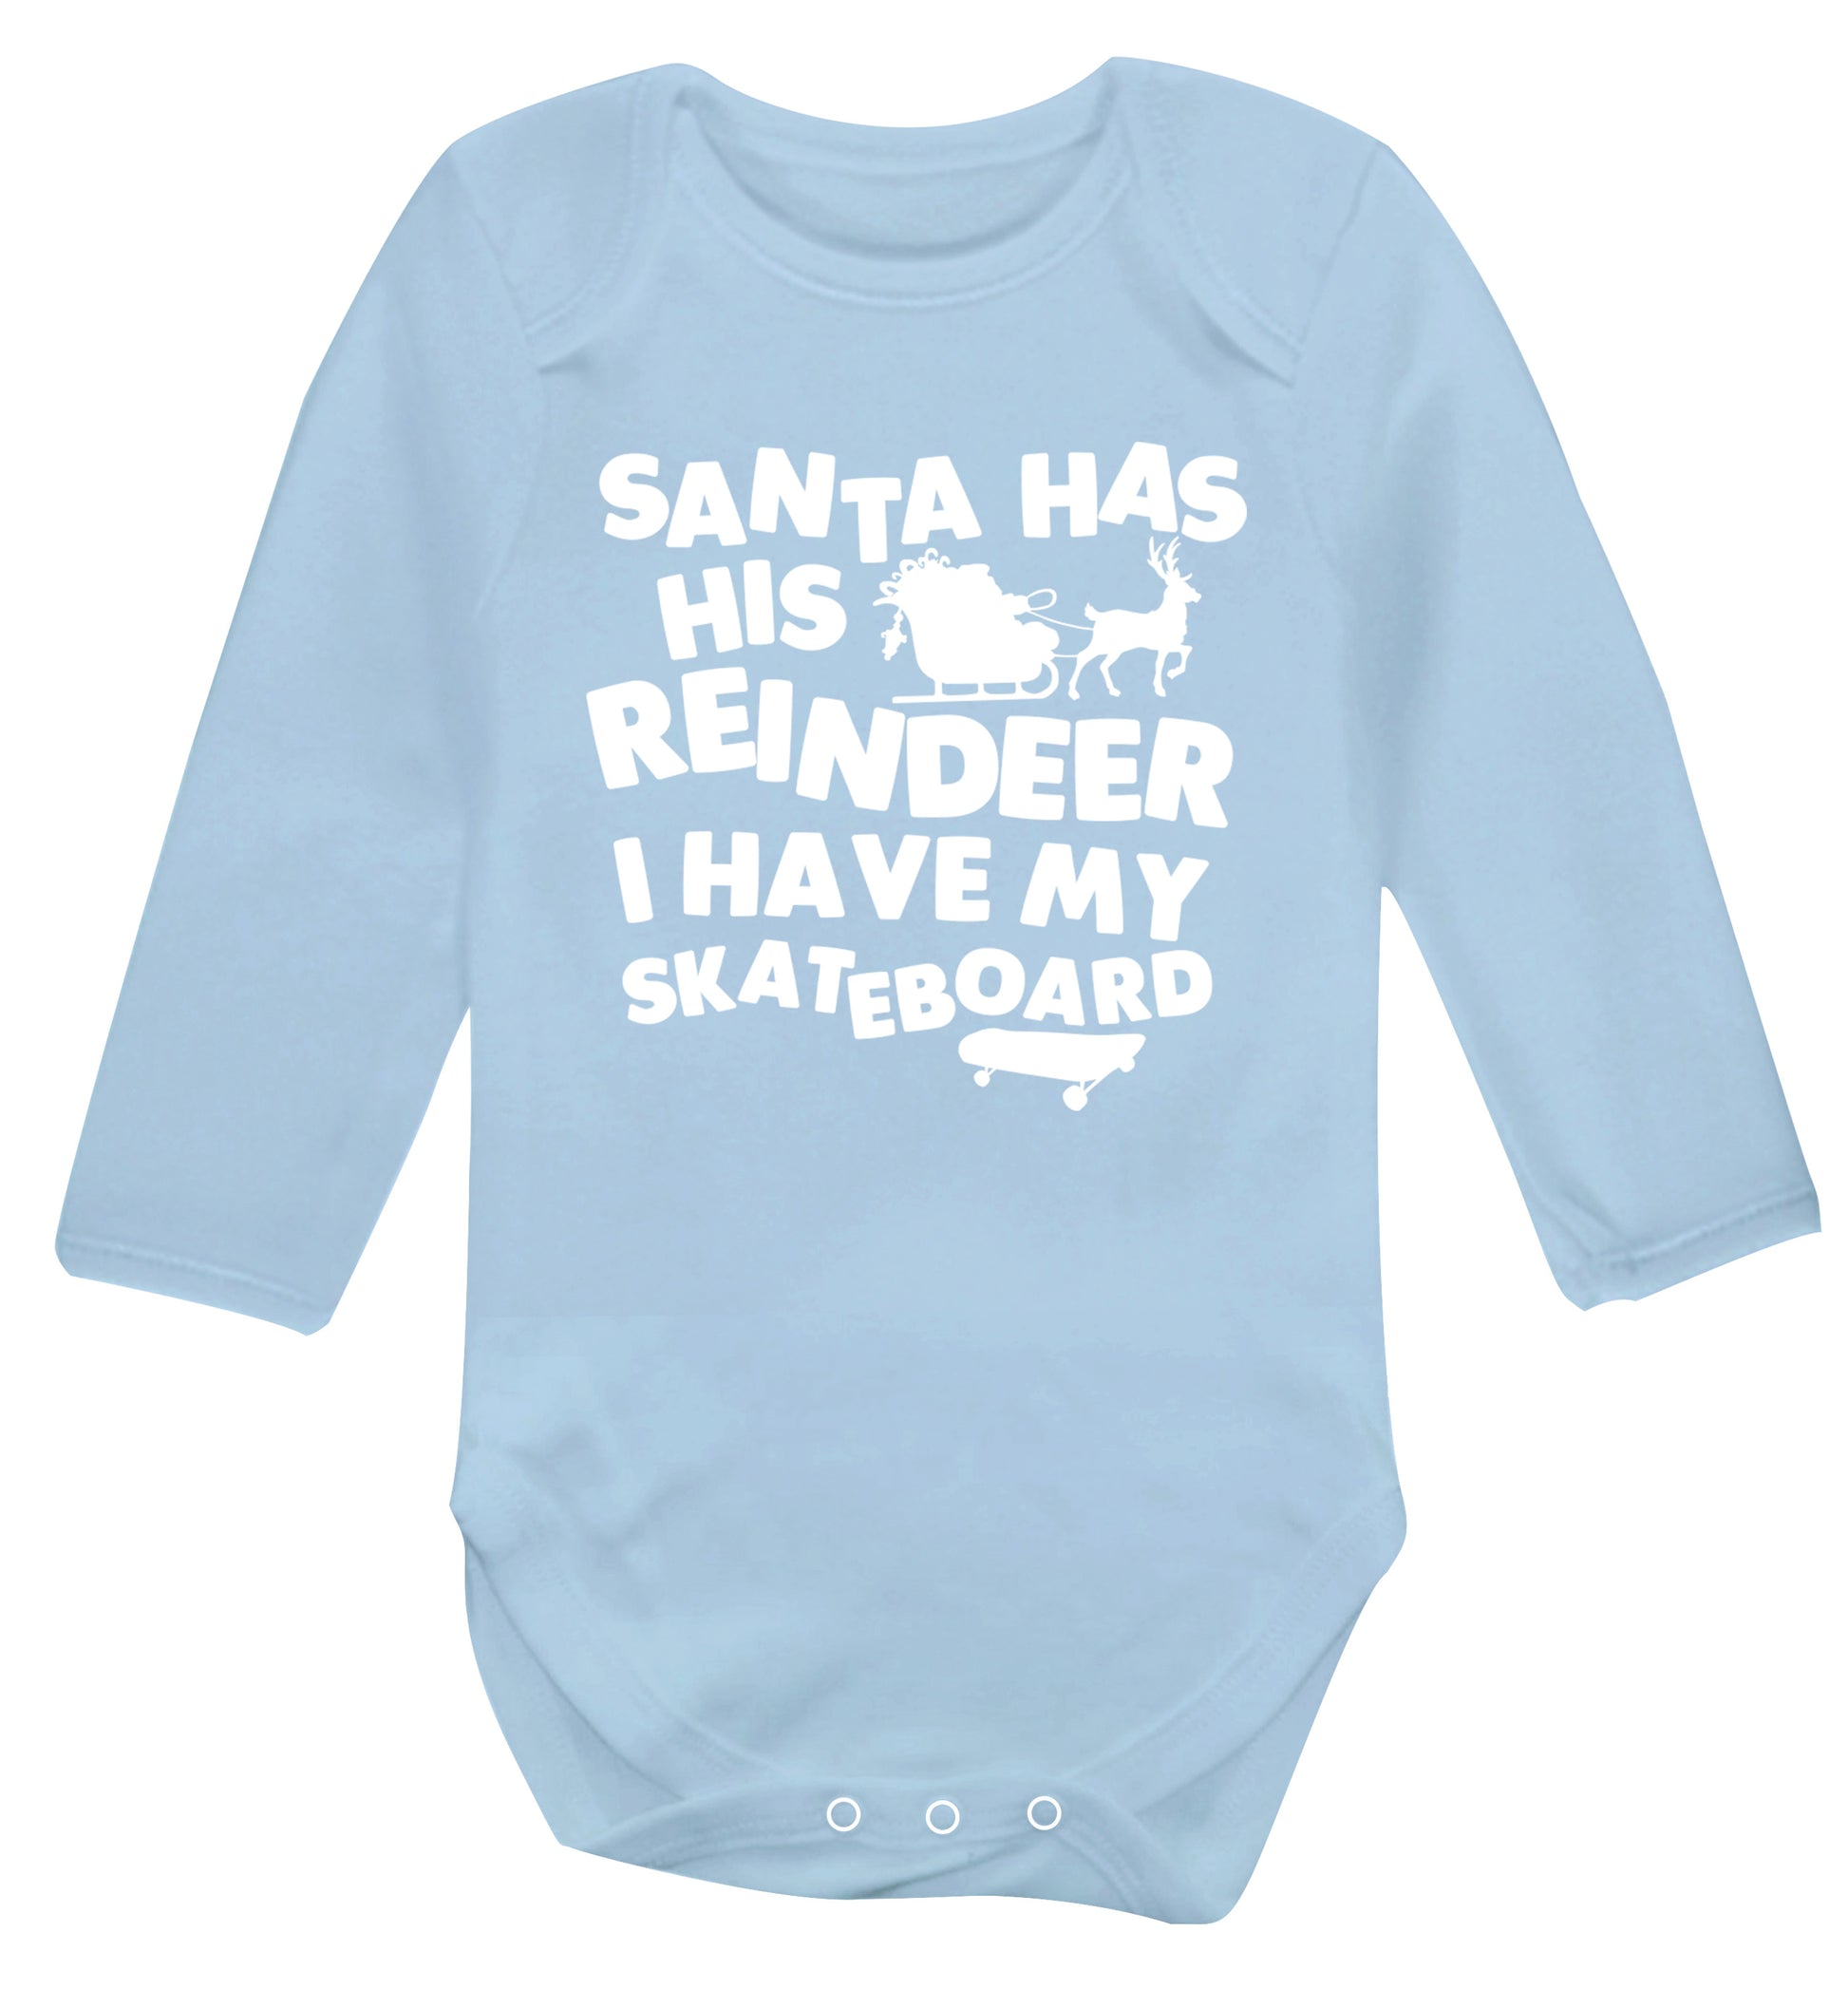 Santa has his reindeer I have my skateboard Baby Vest long sleeved pale blue 6-12 months